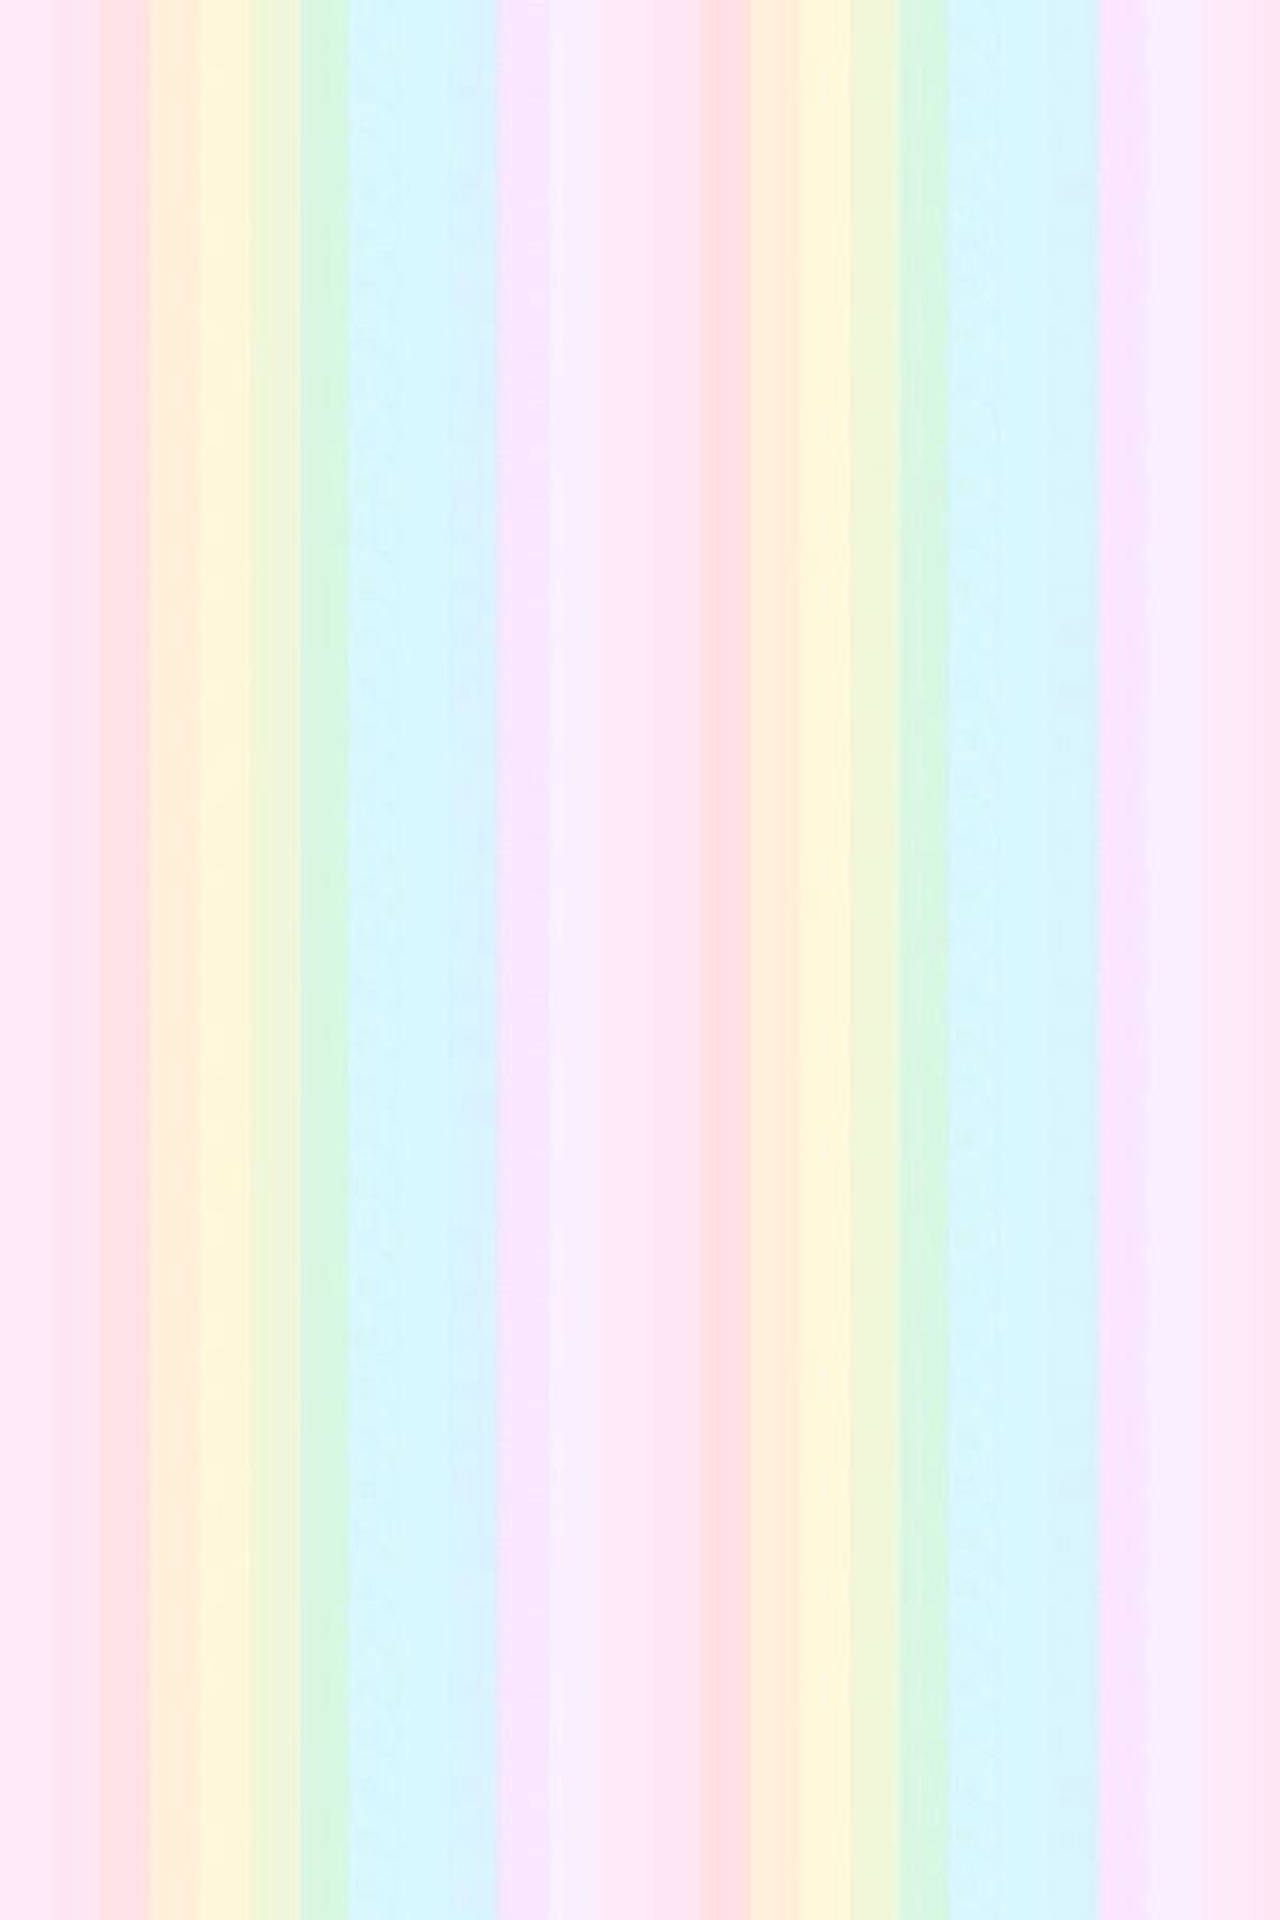 Free Pastel Rainbow Wallpaper Downloads, [100+] Pastel Rainbow Wallpapers  for FREE 